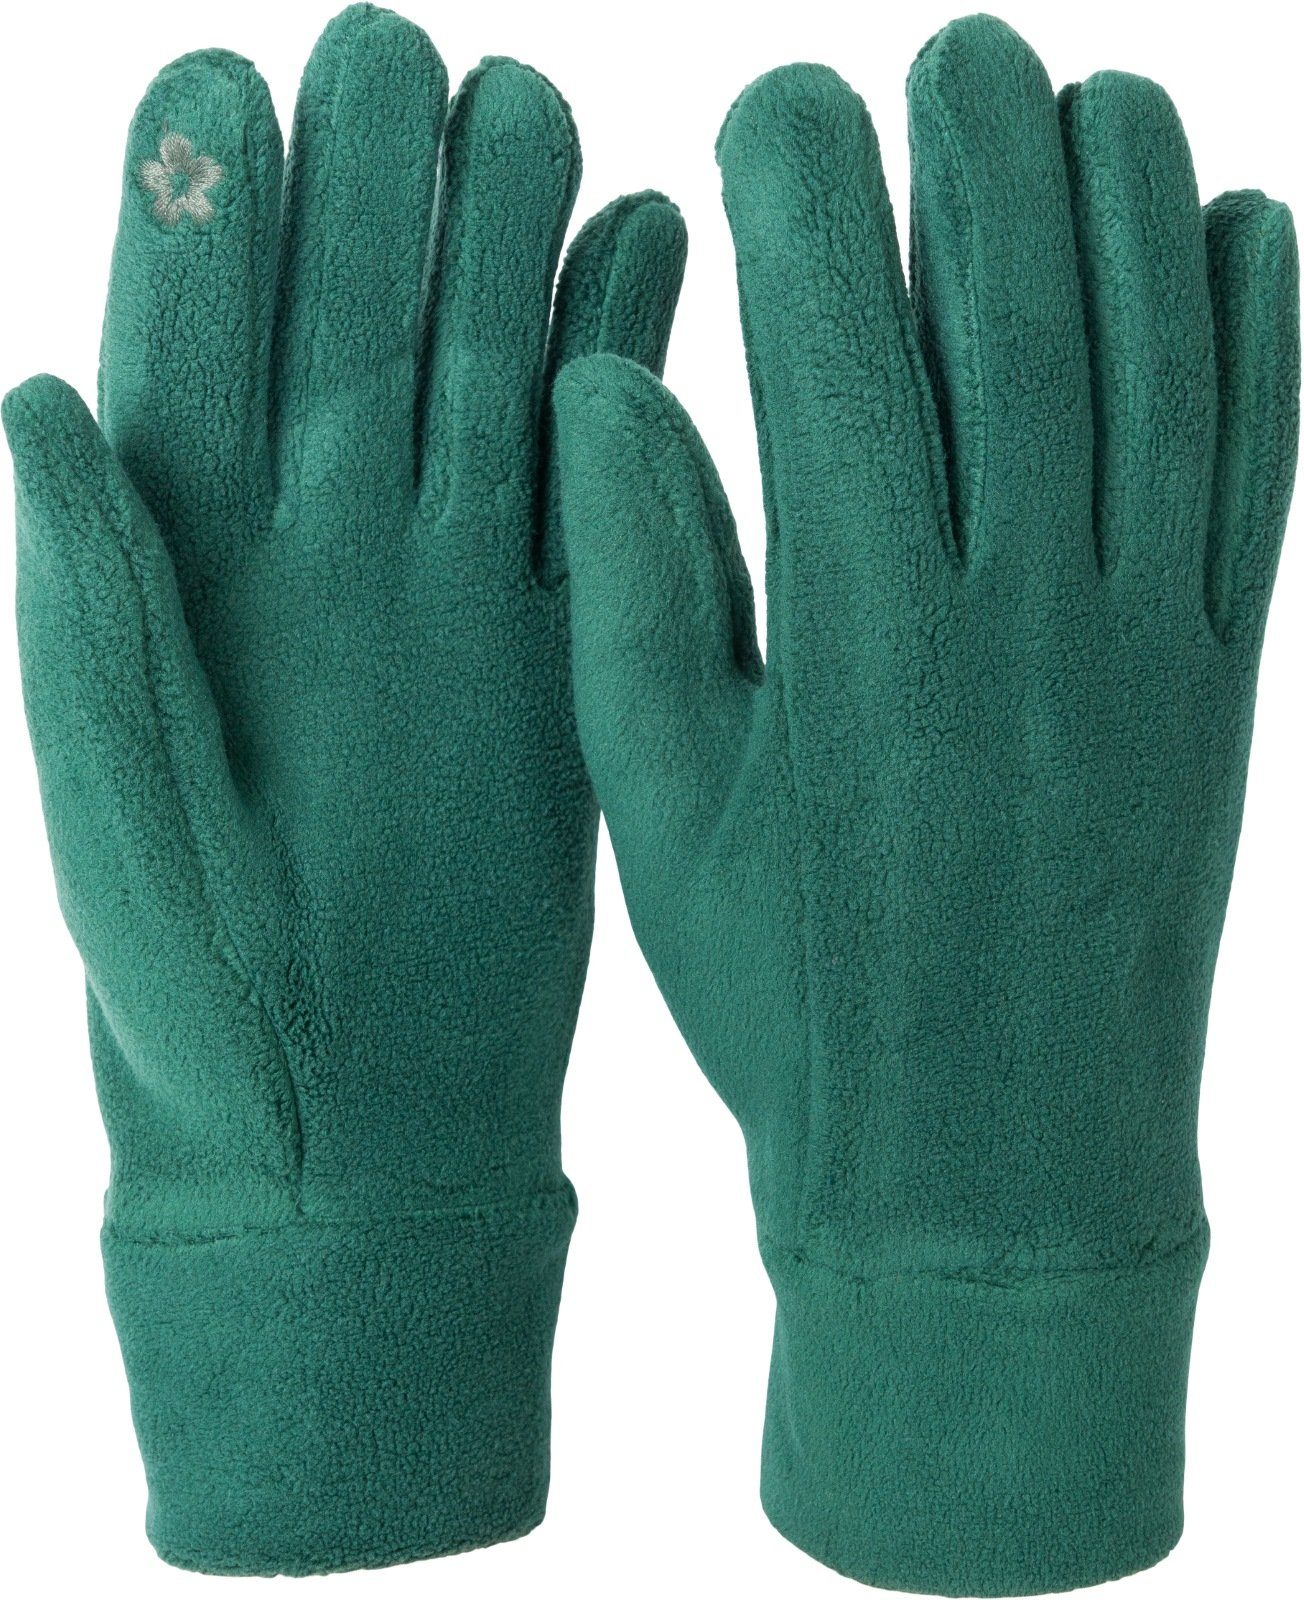 styleBREAKER Fleecehandschuhe Einfarbige Touchscreen Fleece Handschuhe Dunkelgrün